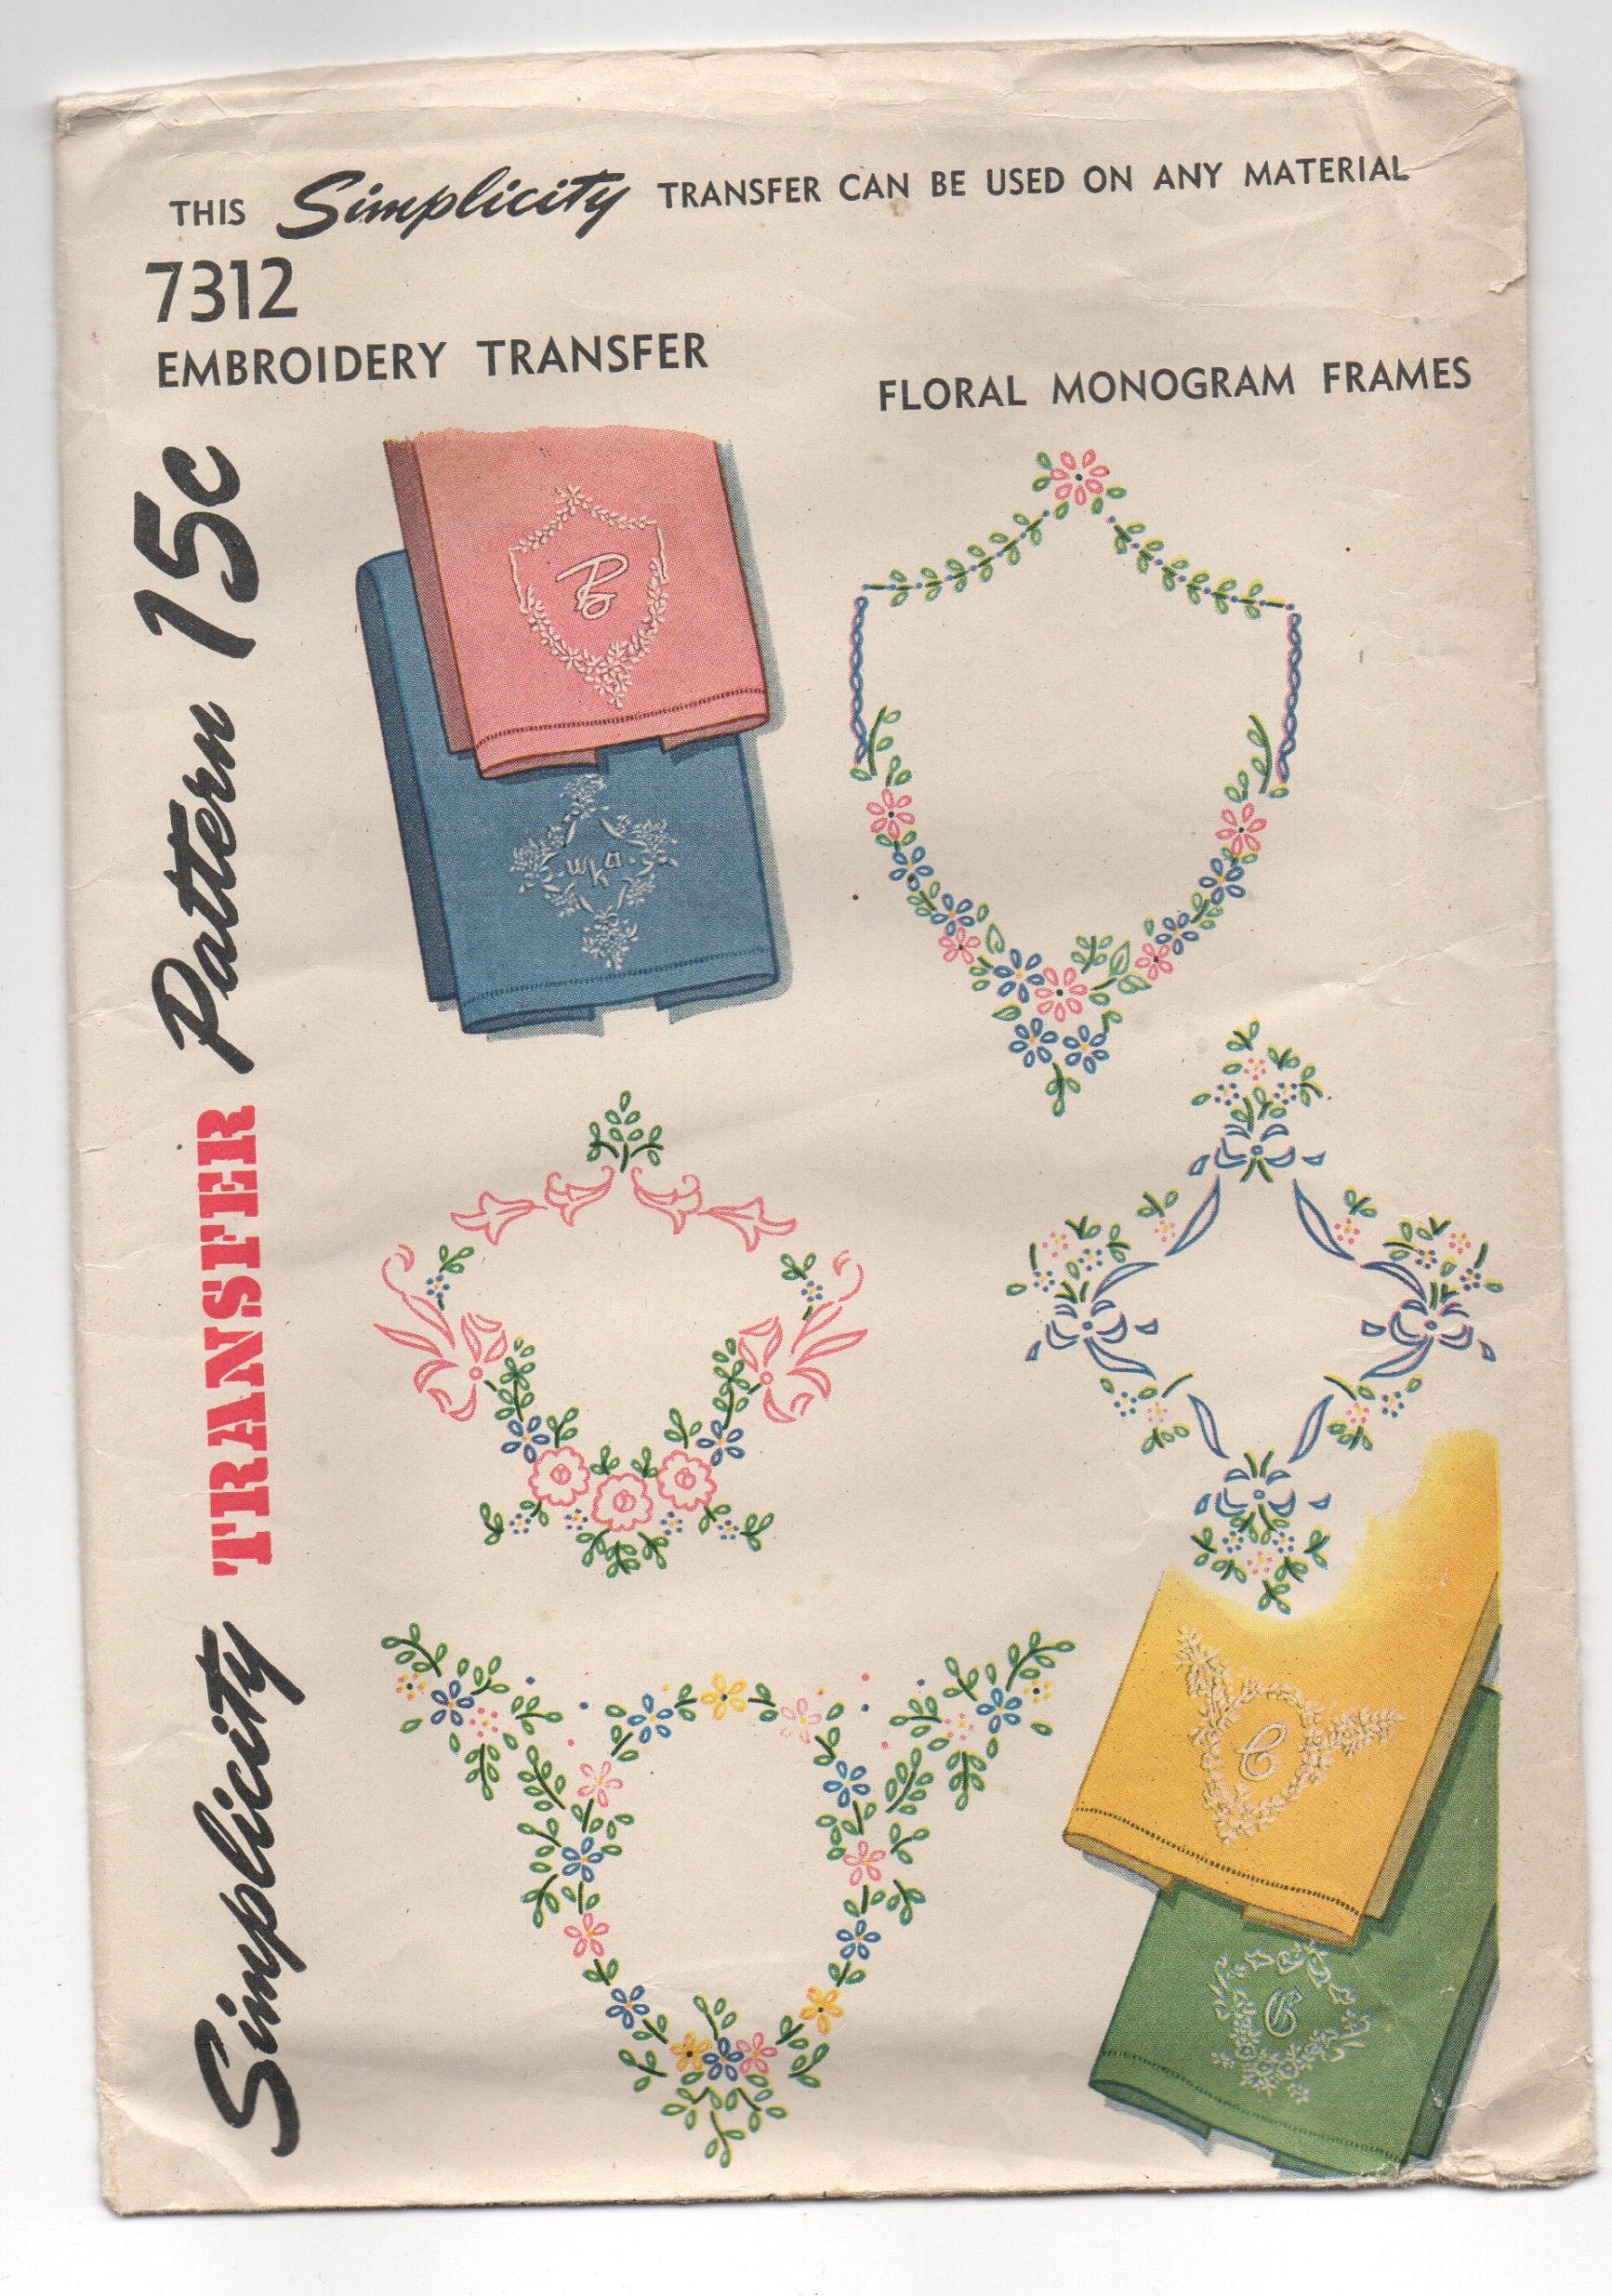 Vintage Flower Monogram Applique Design